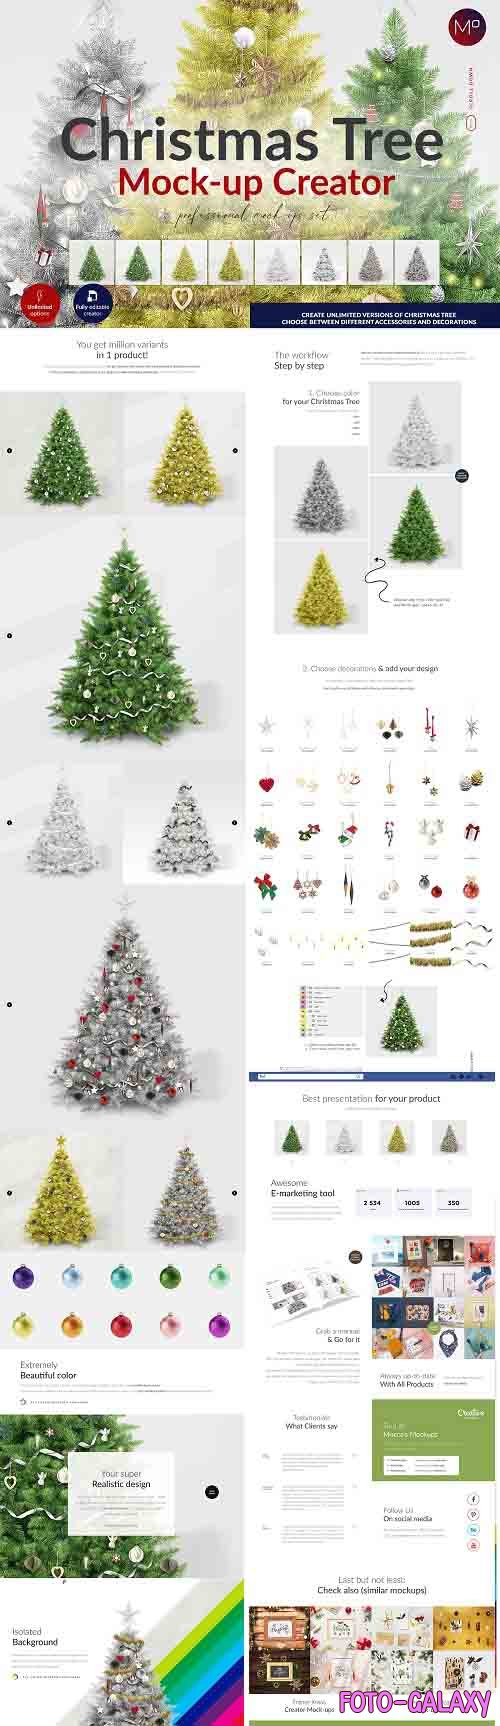 CreativeMarket - Christmas Tree Creator Mock-up 5580357